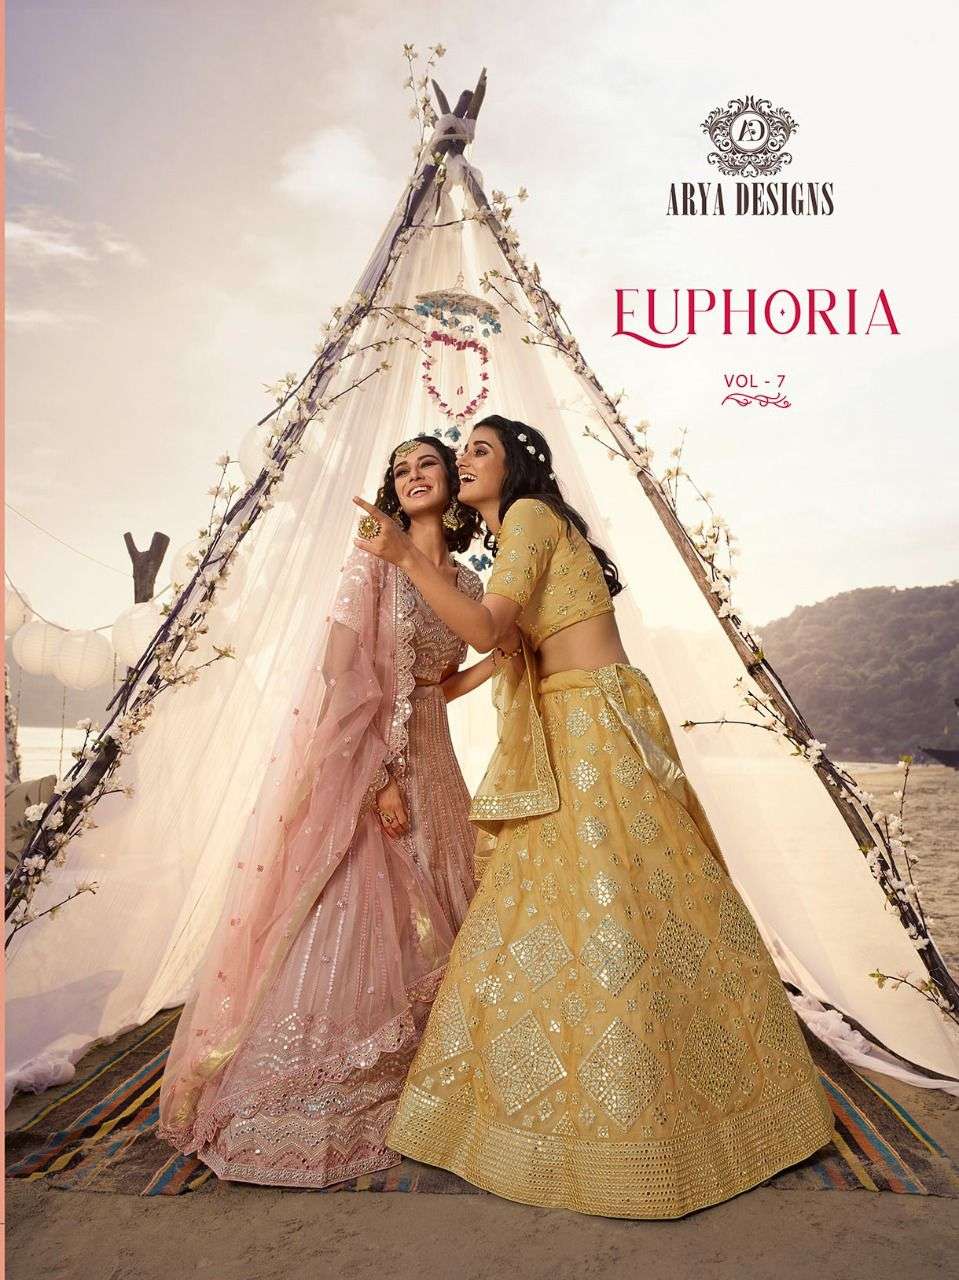 arya designs euphoria vol 7 5501-5508 series wedding festive lehengas for women 